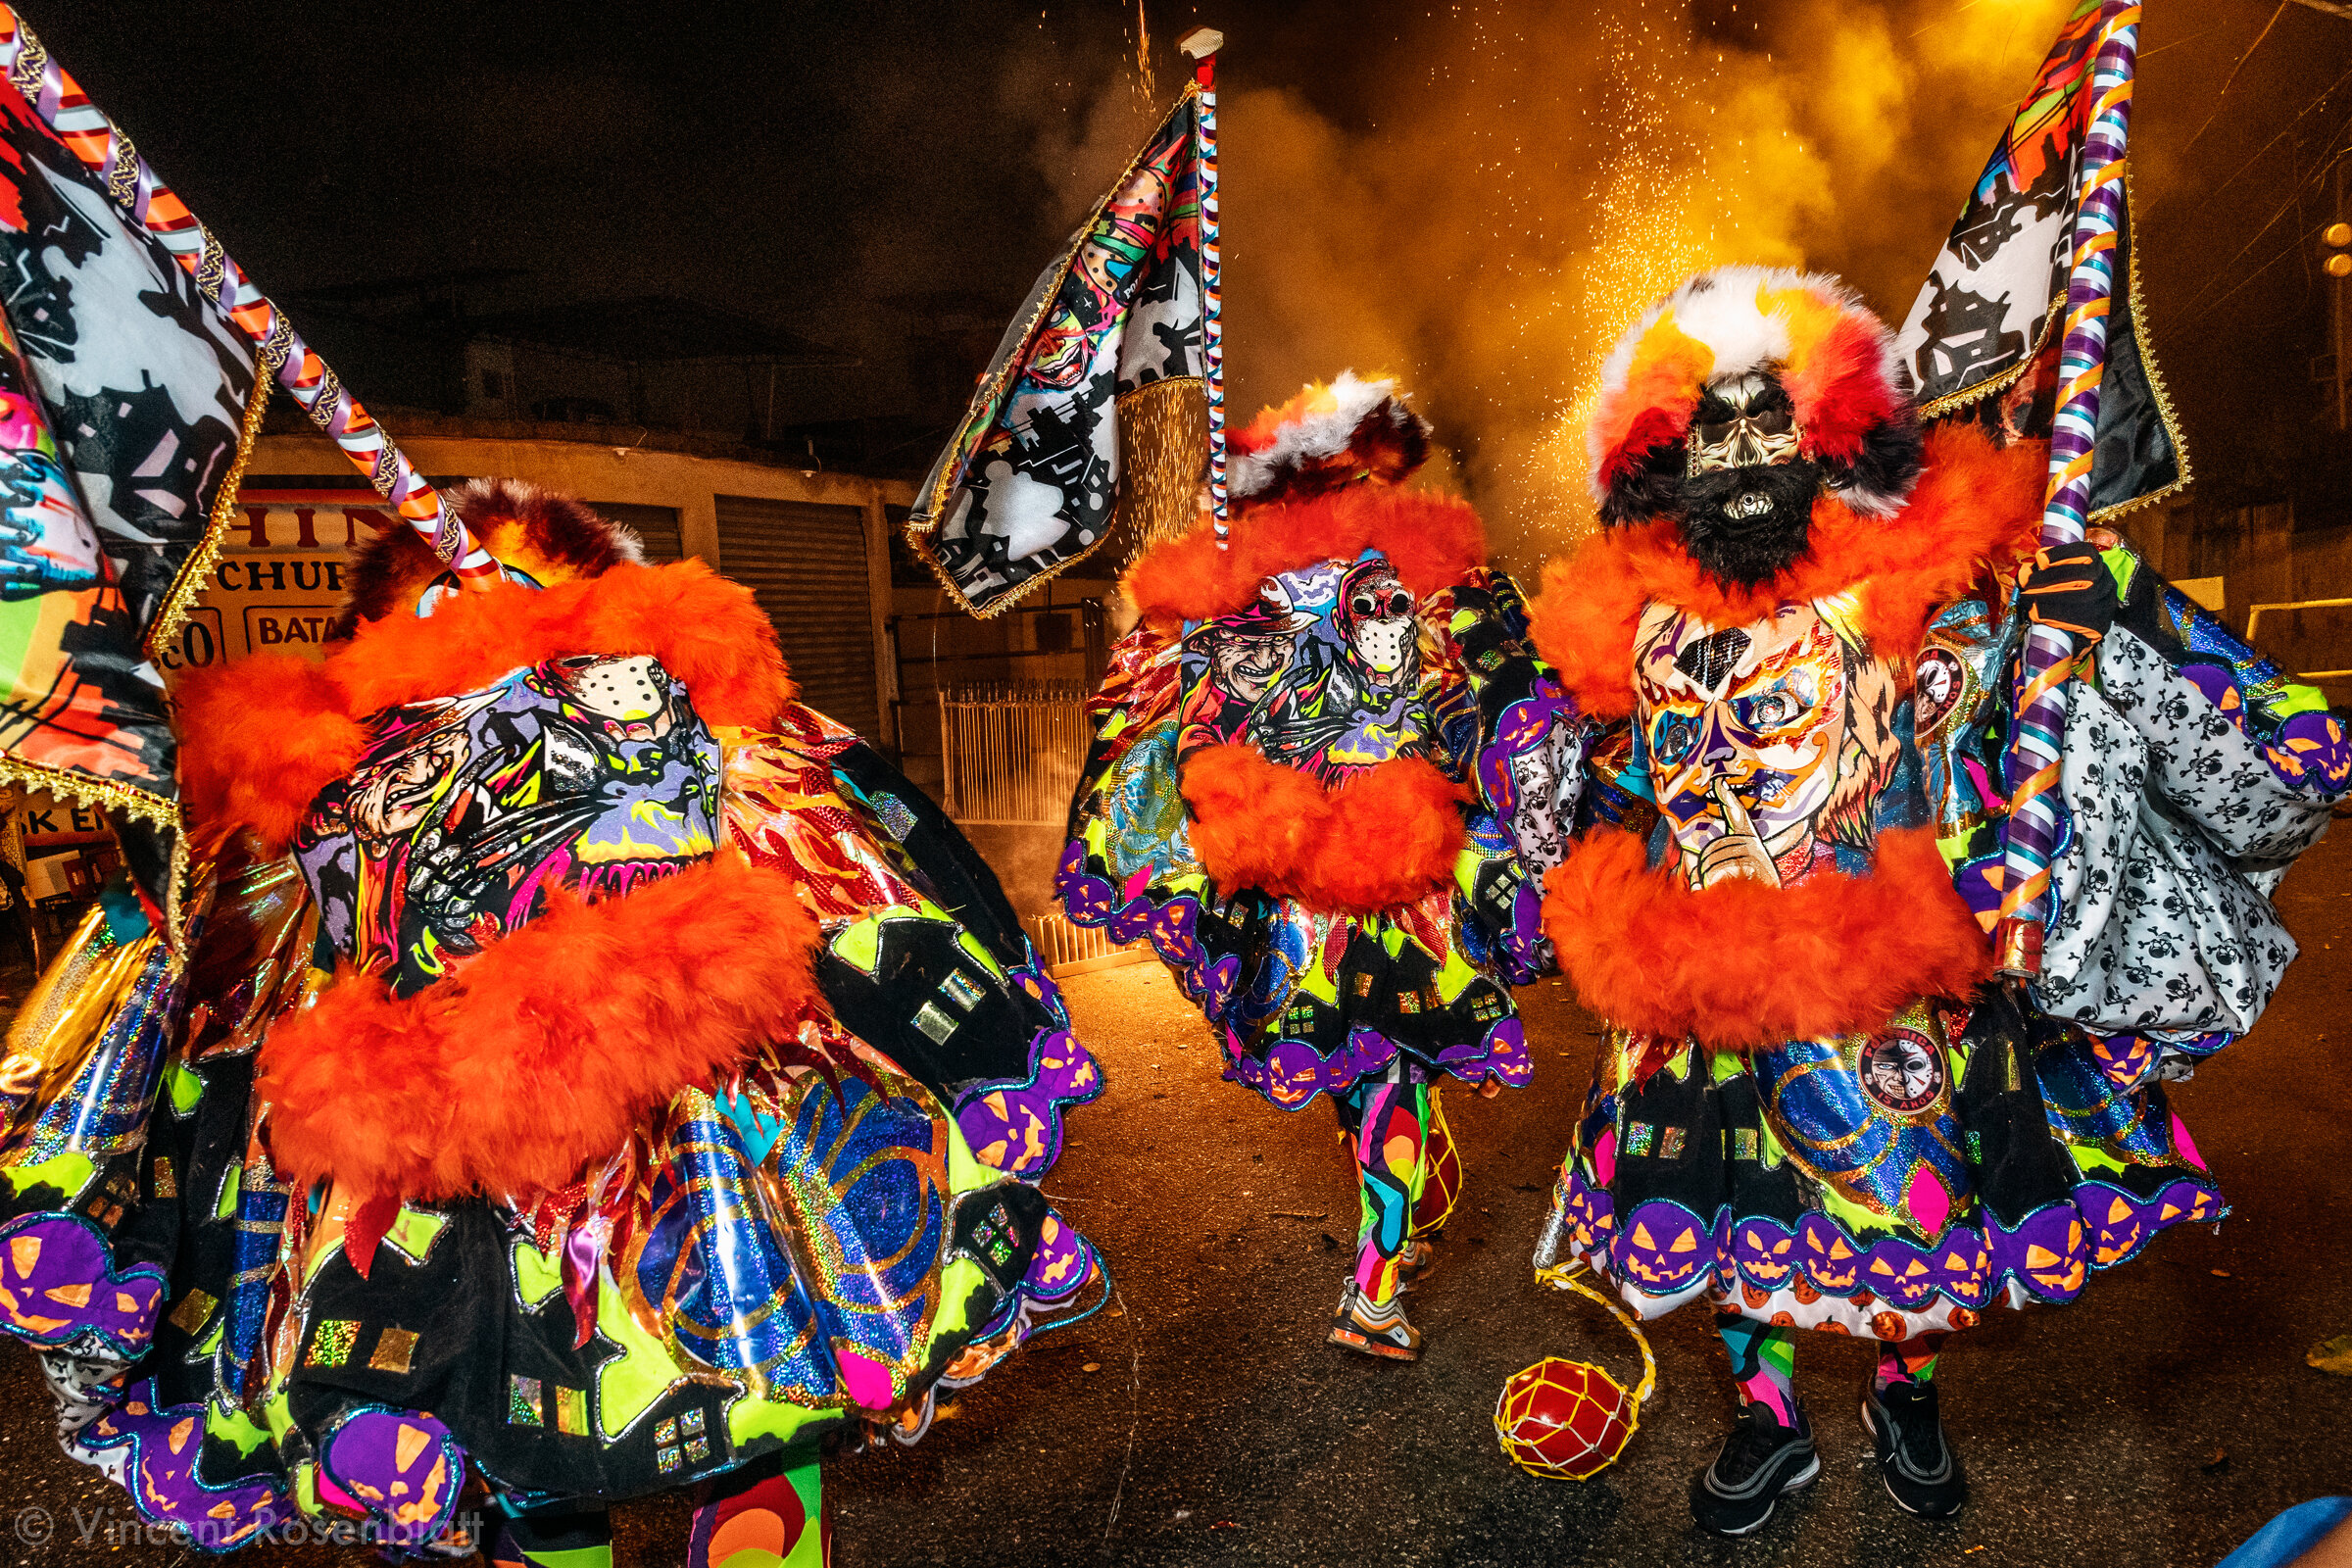  Show of the Polêmica group in Rocha Miranda, North Zone of Rio de Janeiro, Carnival 2020 - inspired by the Freddy Kruegger versus Jason Nightmare series / movies. 